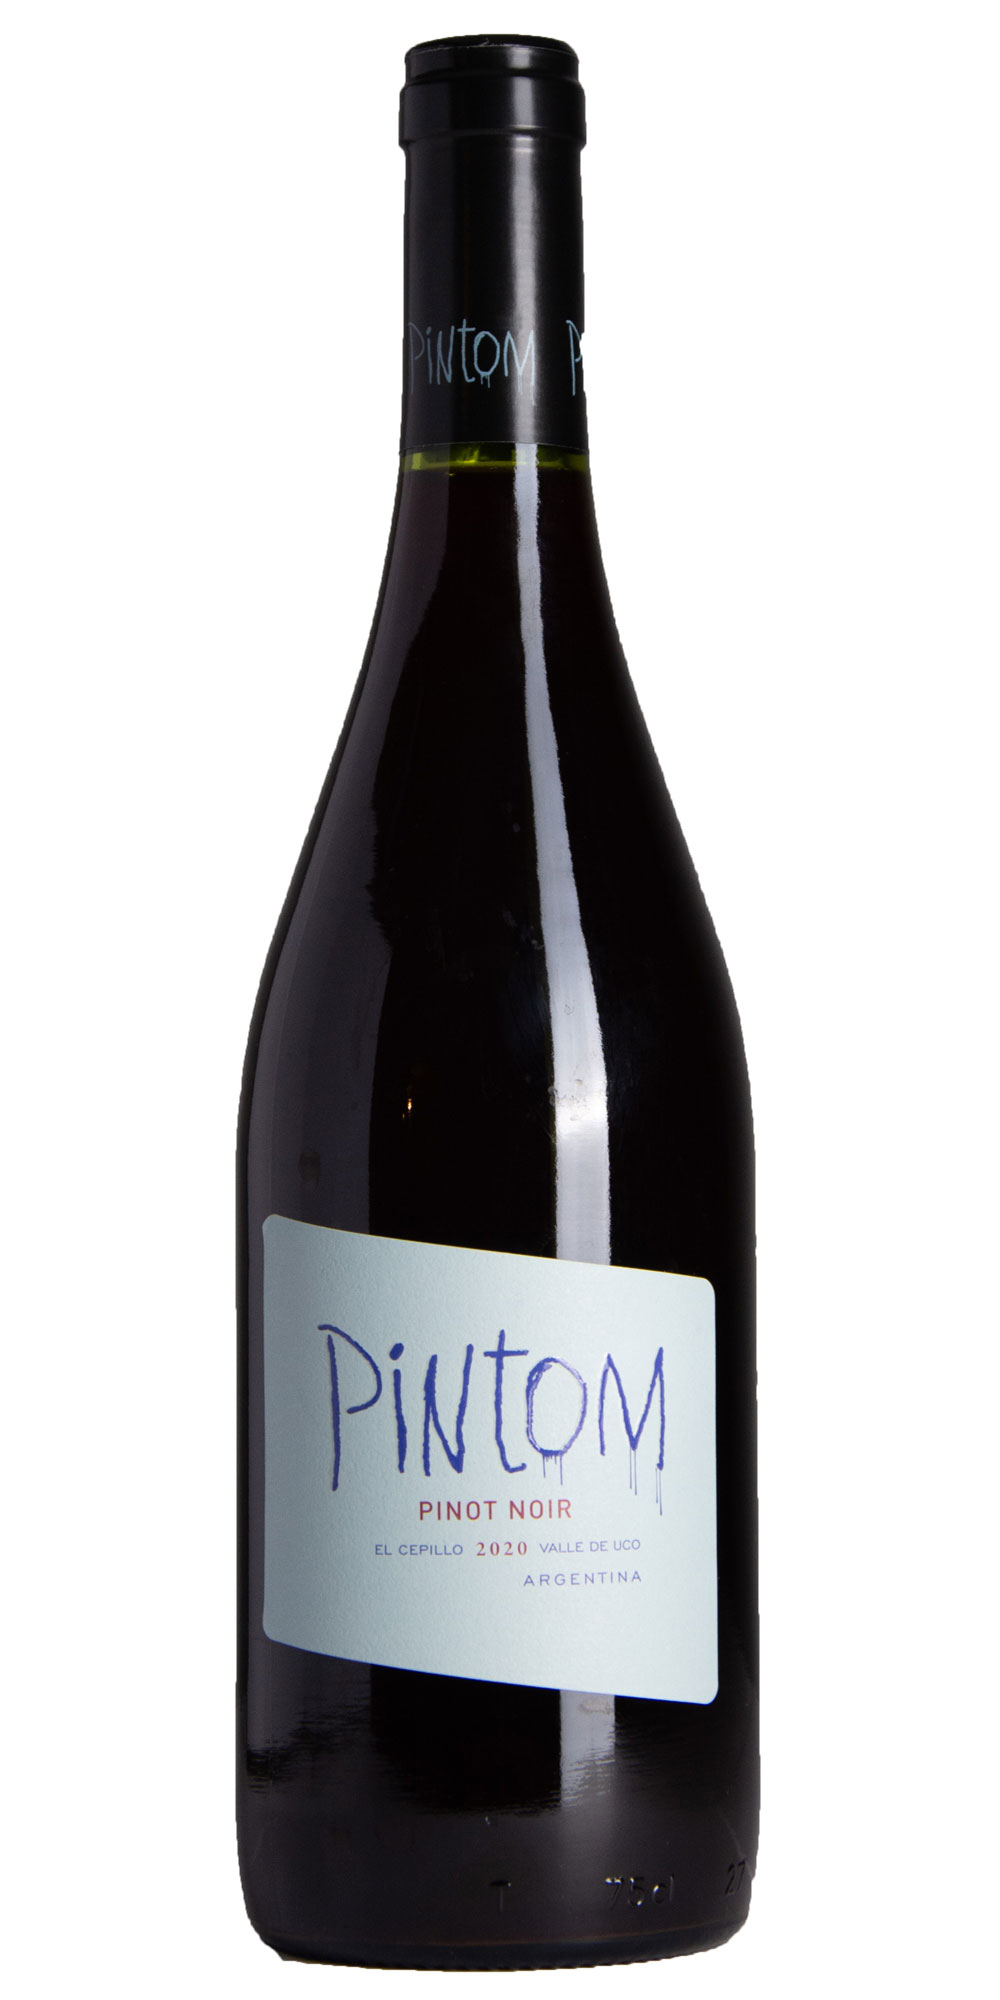 2020 Pinot Noir Pintom